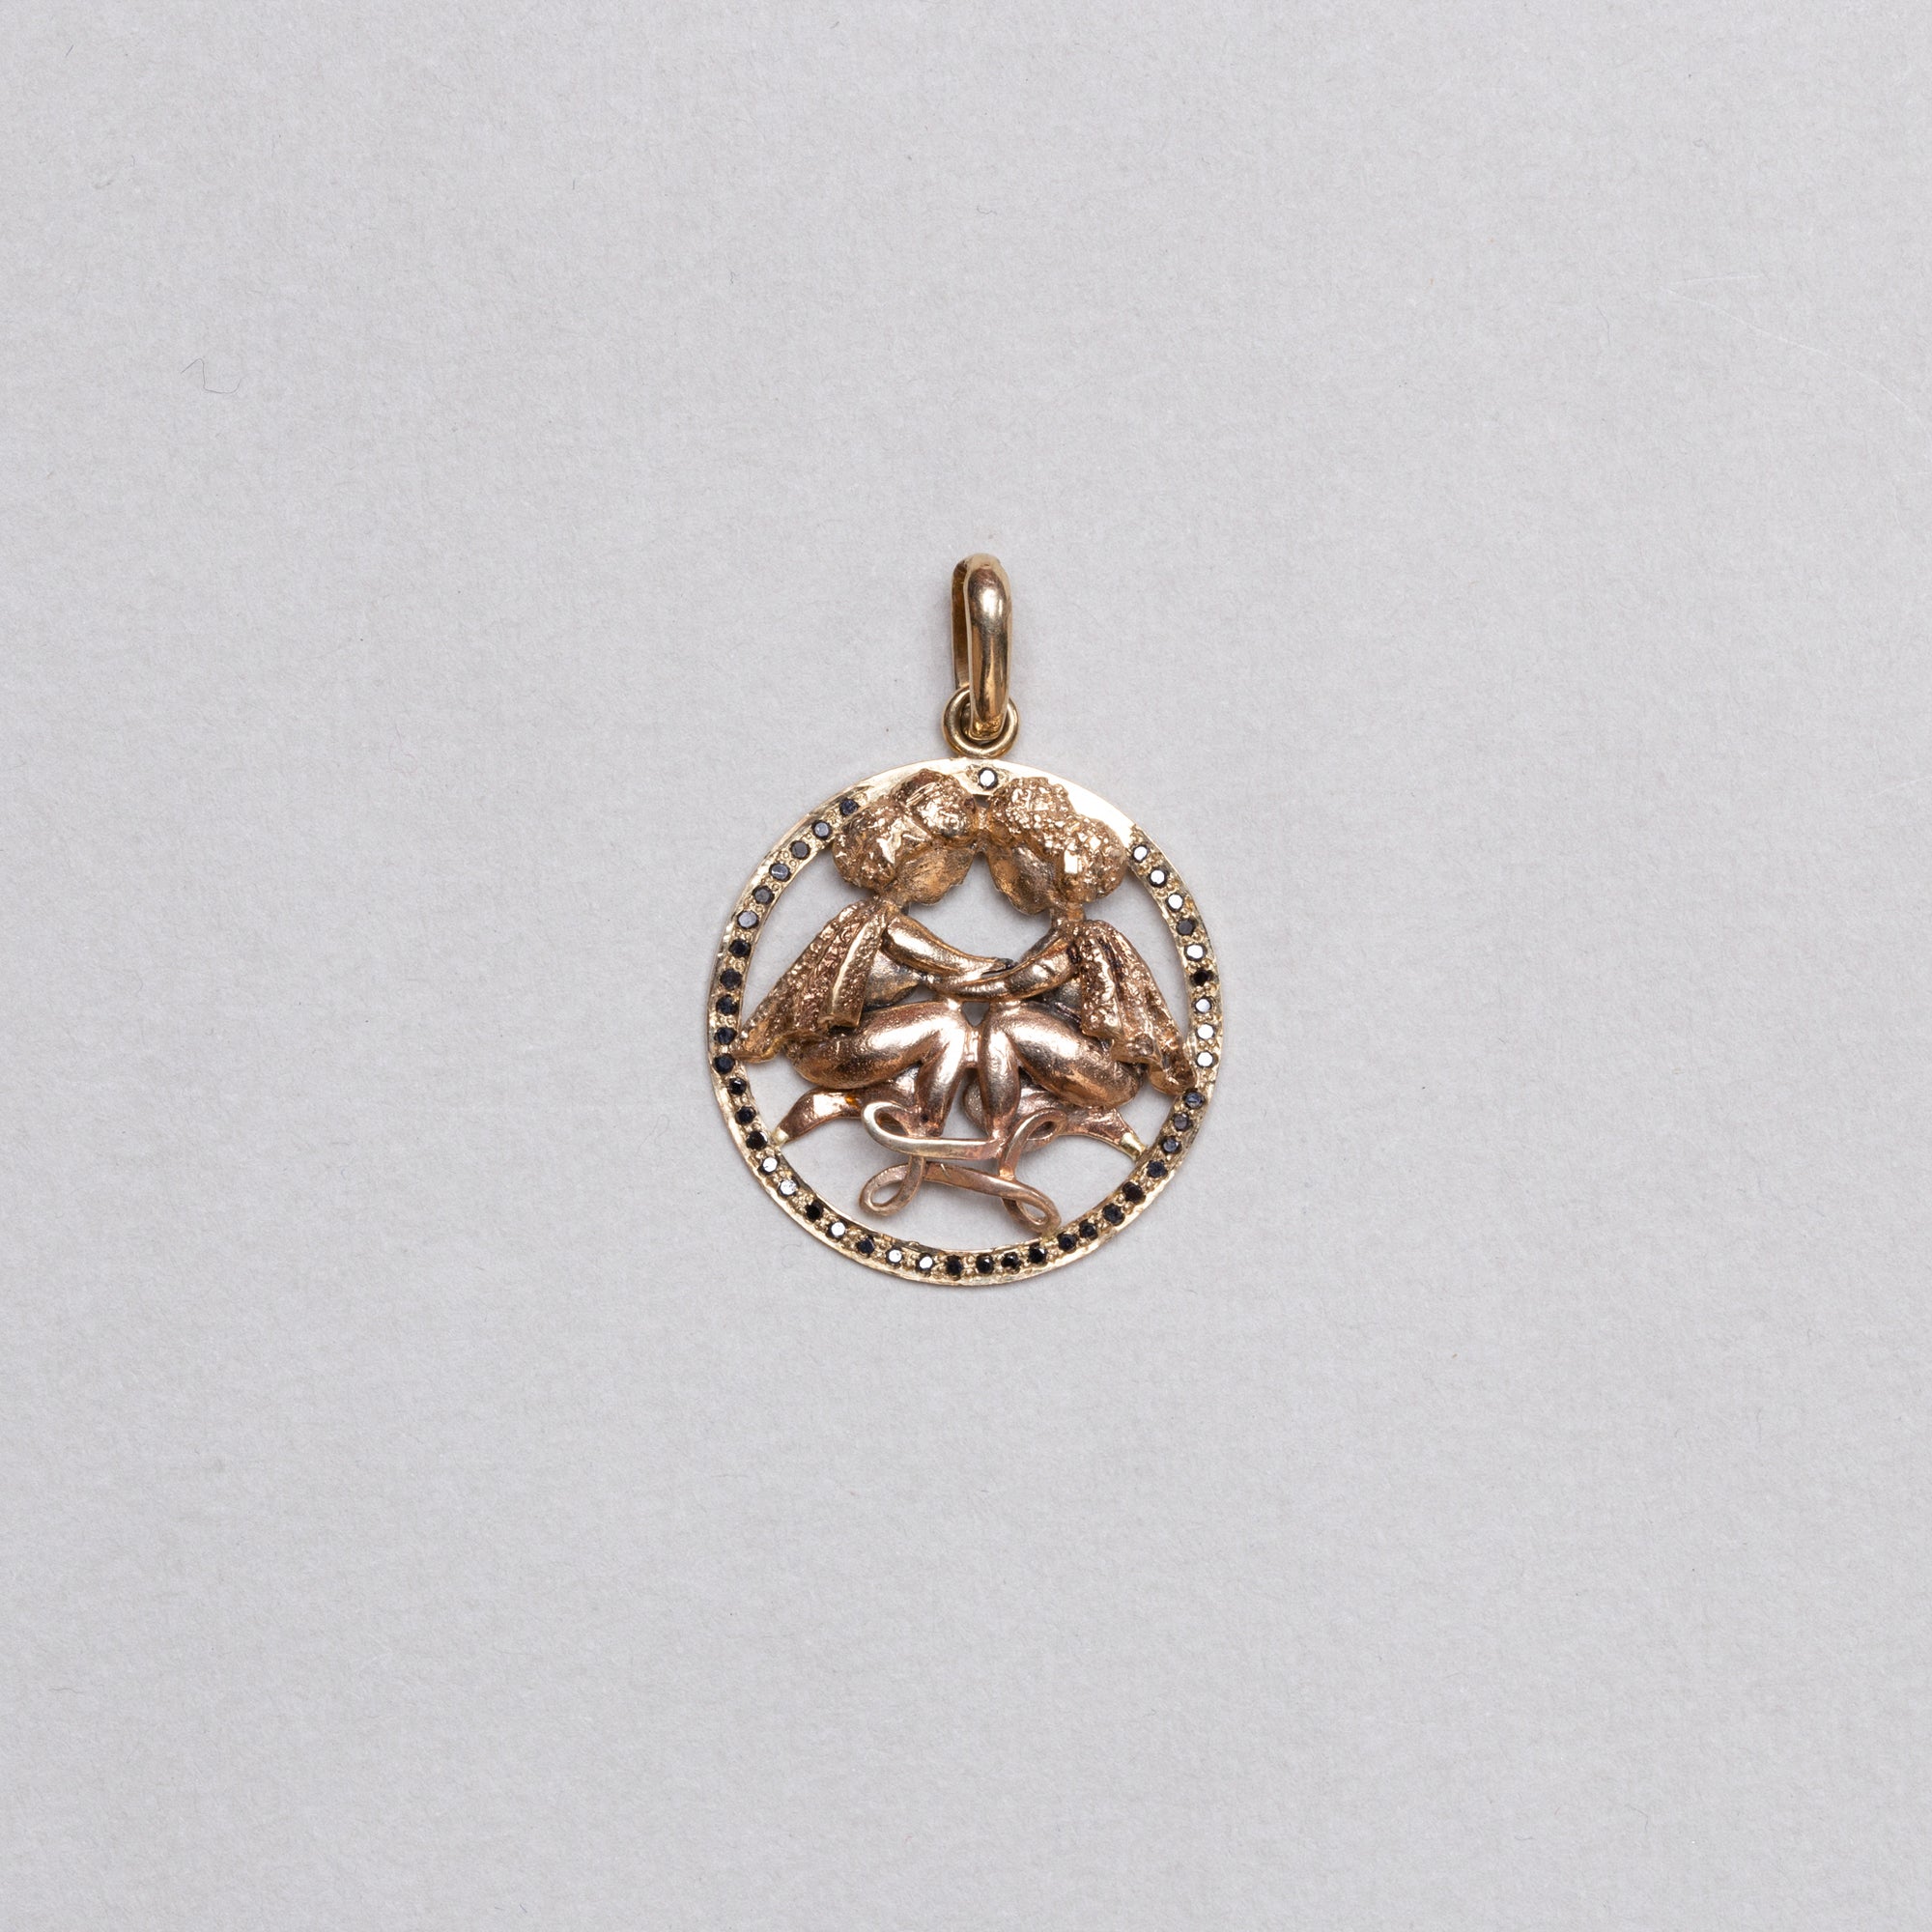 Vintage 9ct Gold Gemini Pendant Charm with Black Diamonds